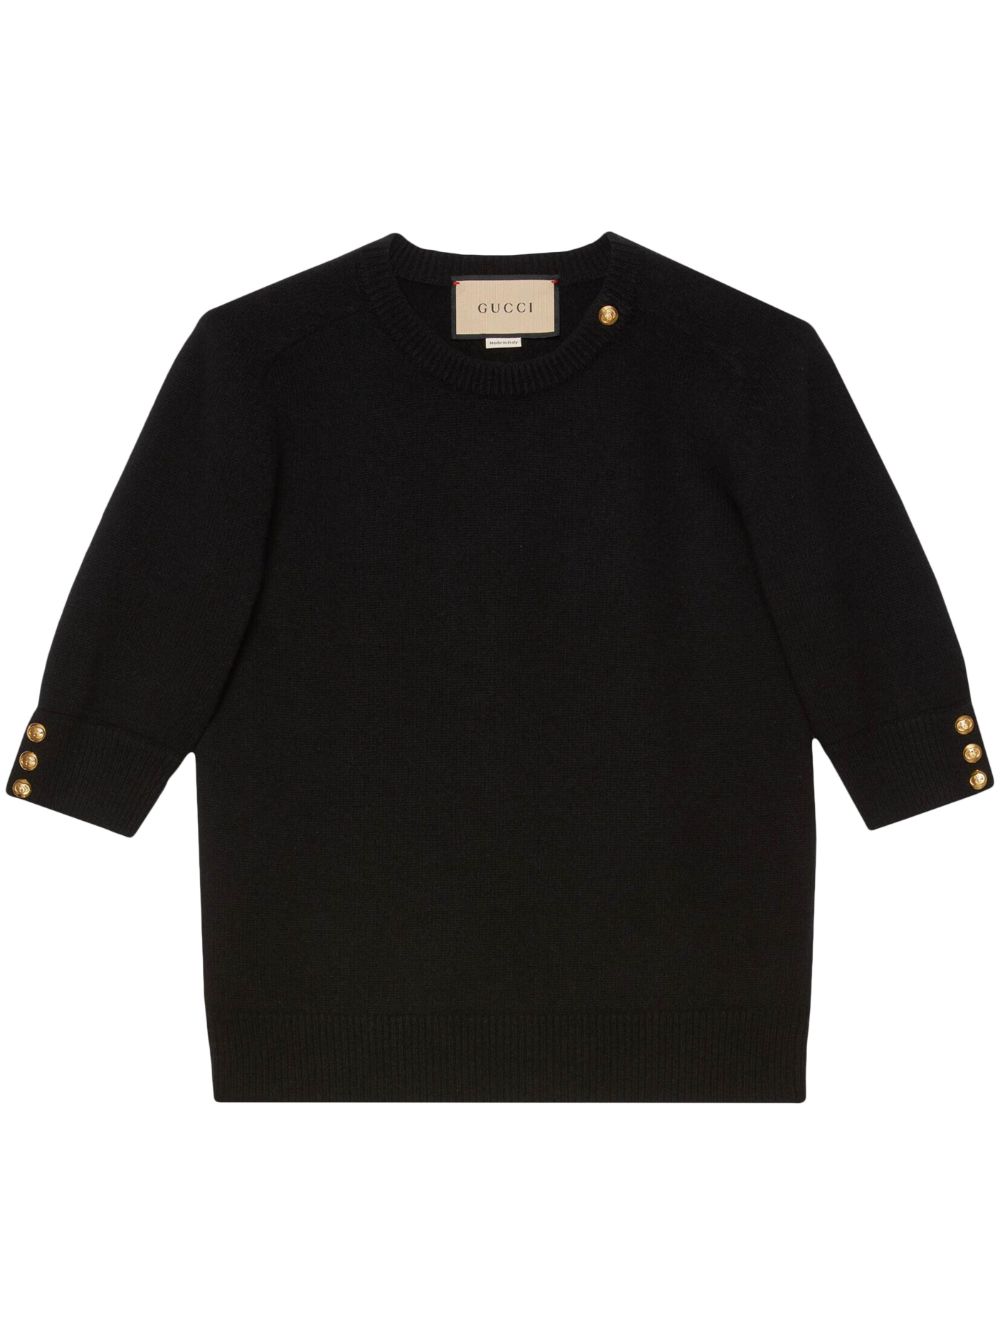 Gucci short-sleeve fine knit top - Black